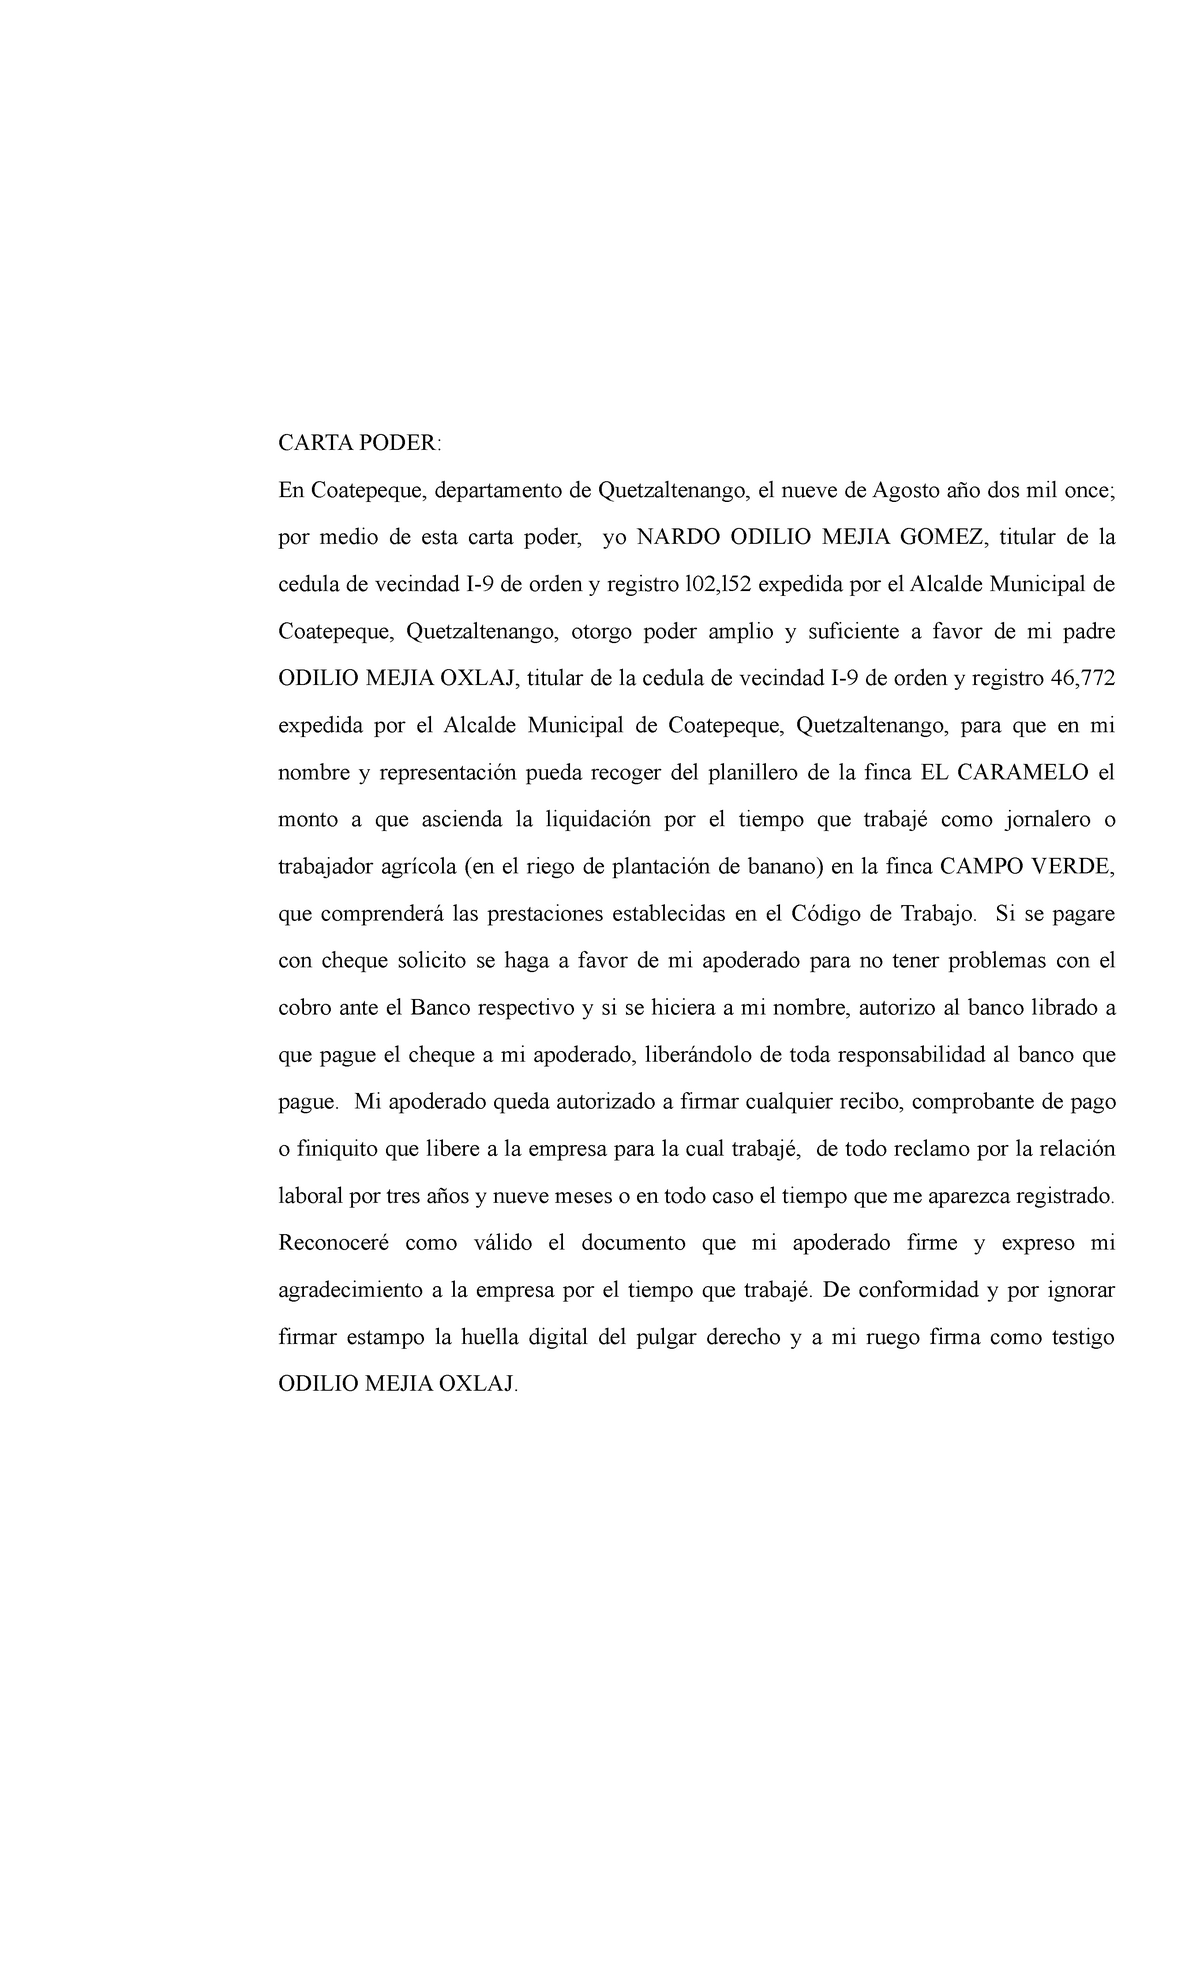 Carta Poder (hijo) sede a Padre al cobro de prestaciones - CARTA PODER: En  Coatepeque, departamento - Studocu